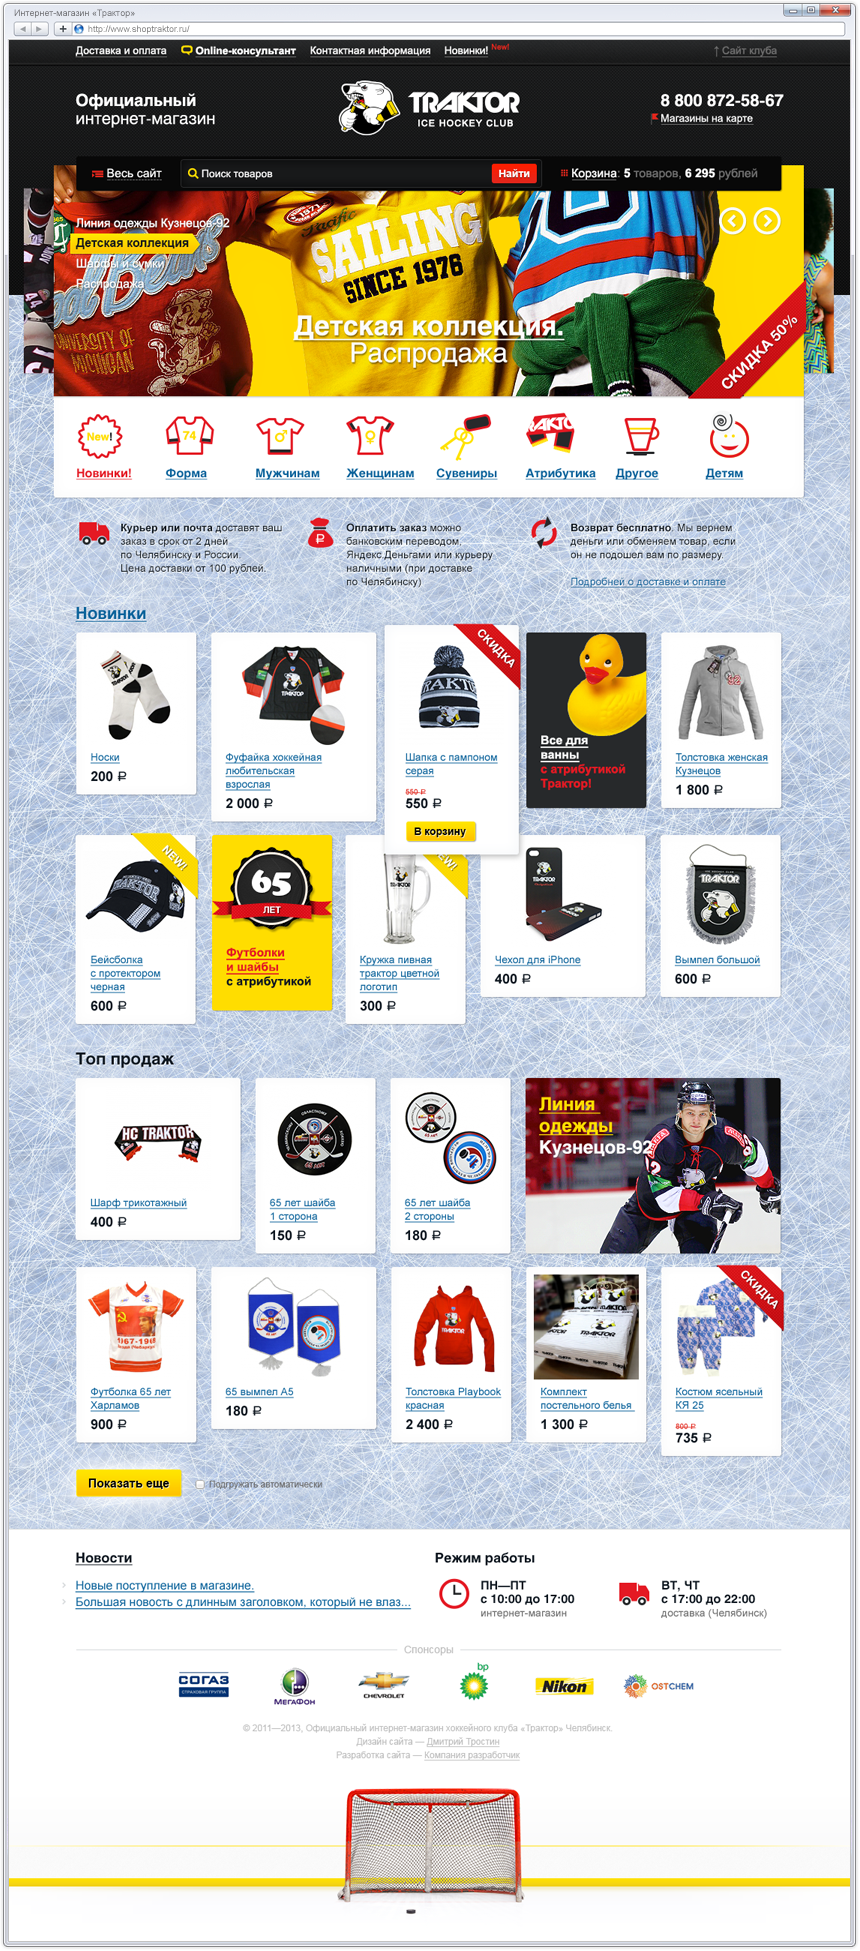 Сайт Интернет Магазин Челябинск